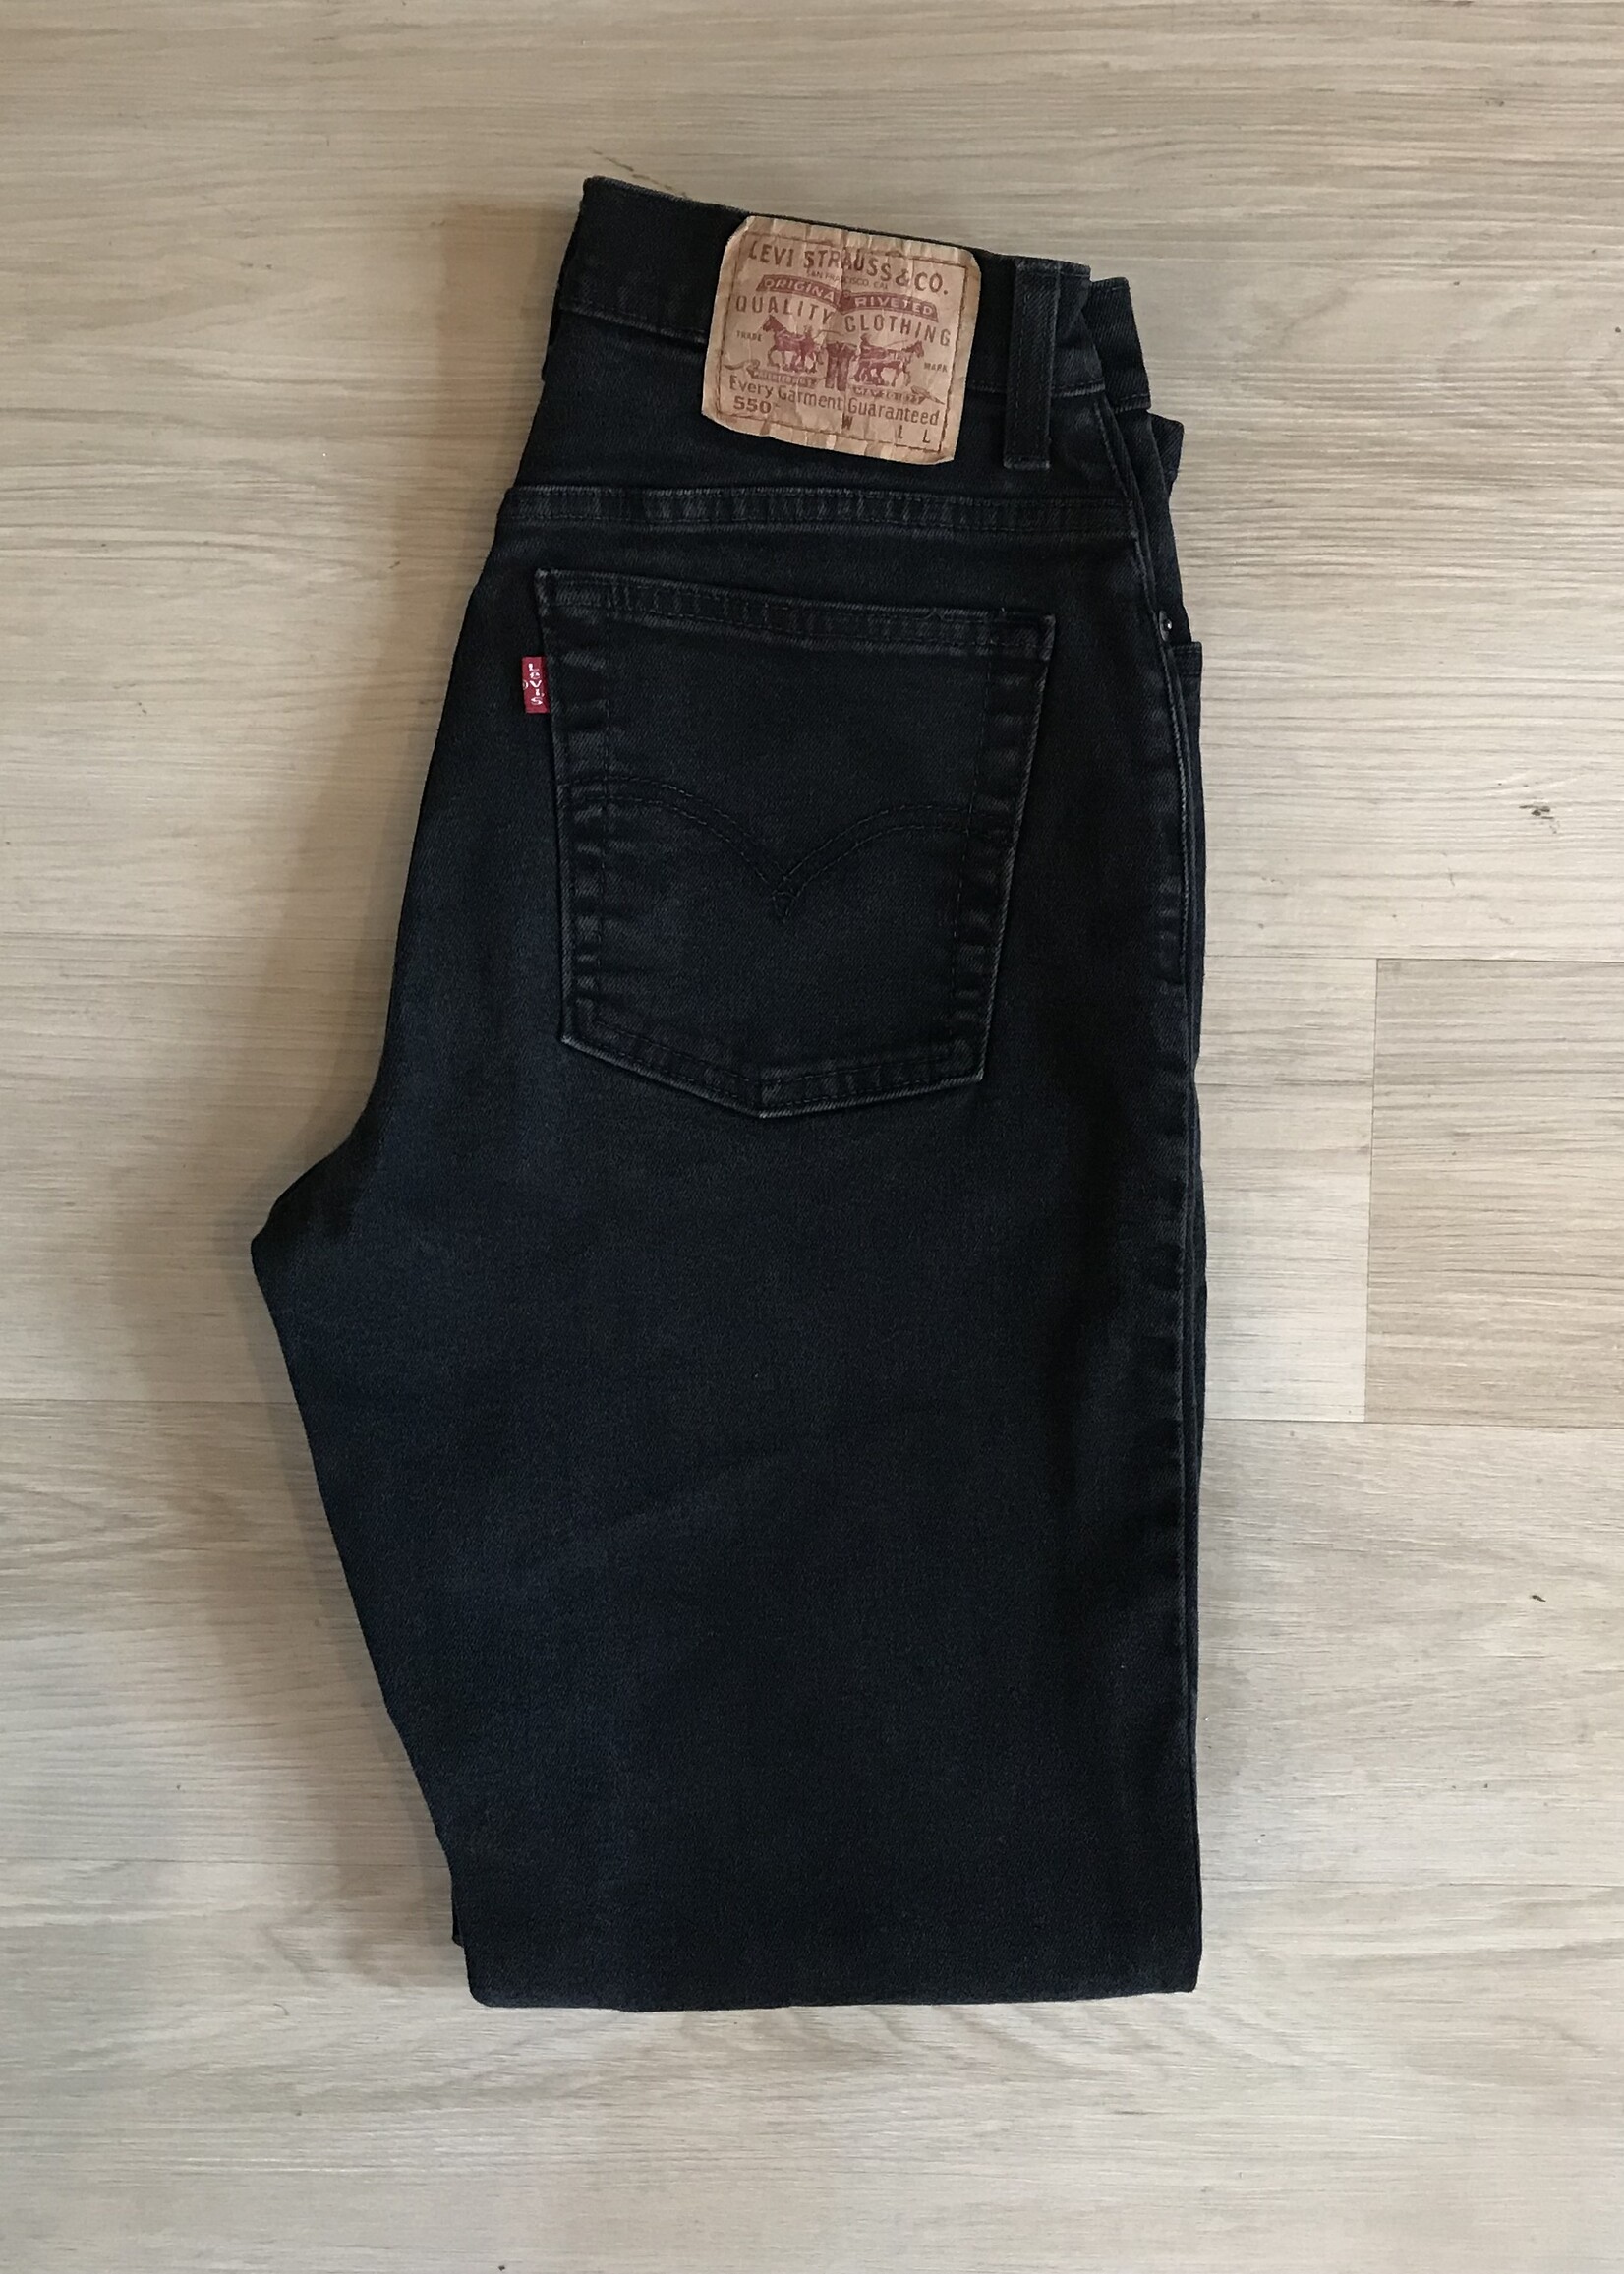 12096	2002 levi's 550 black jeans sz 10